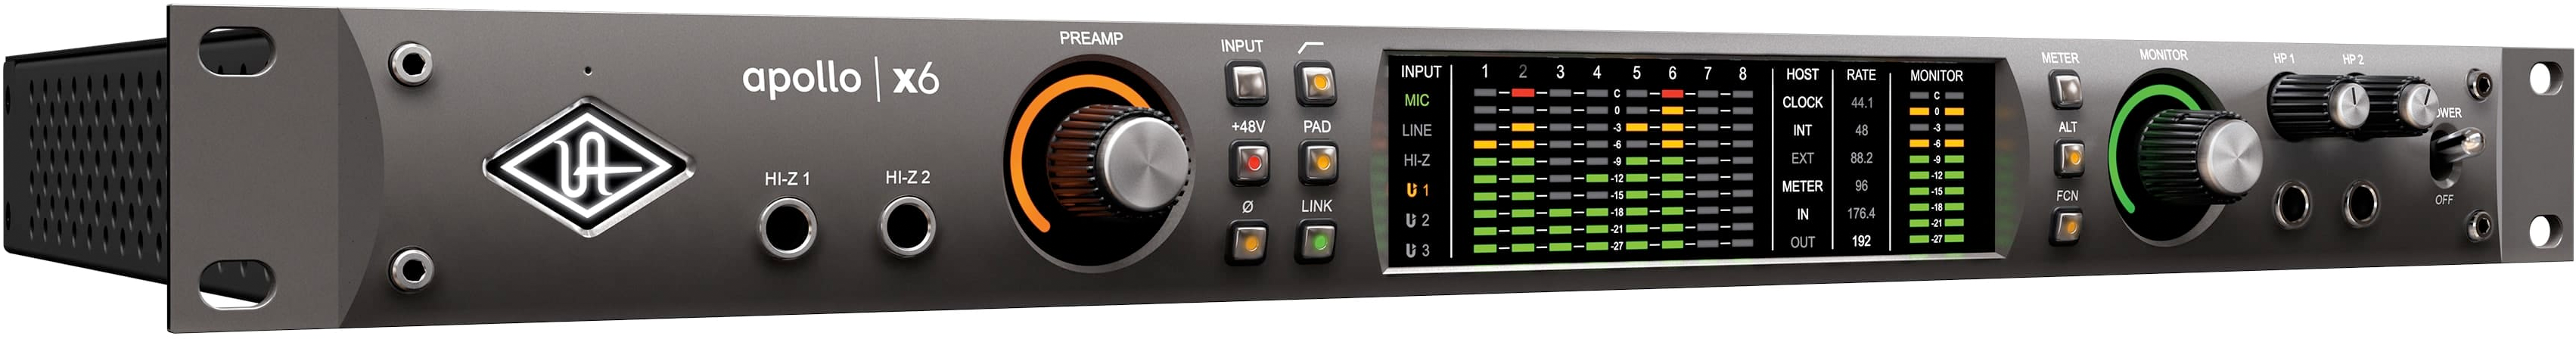 Universal Audio Apollo X6 - Interface de audio thunderbolt - Main picture